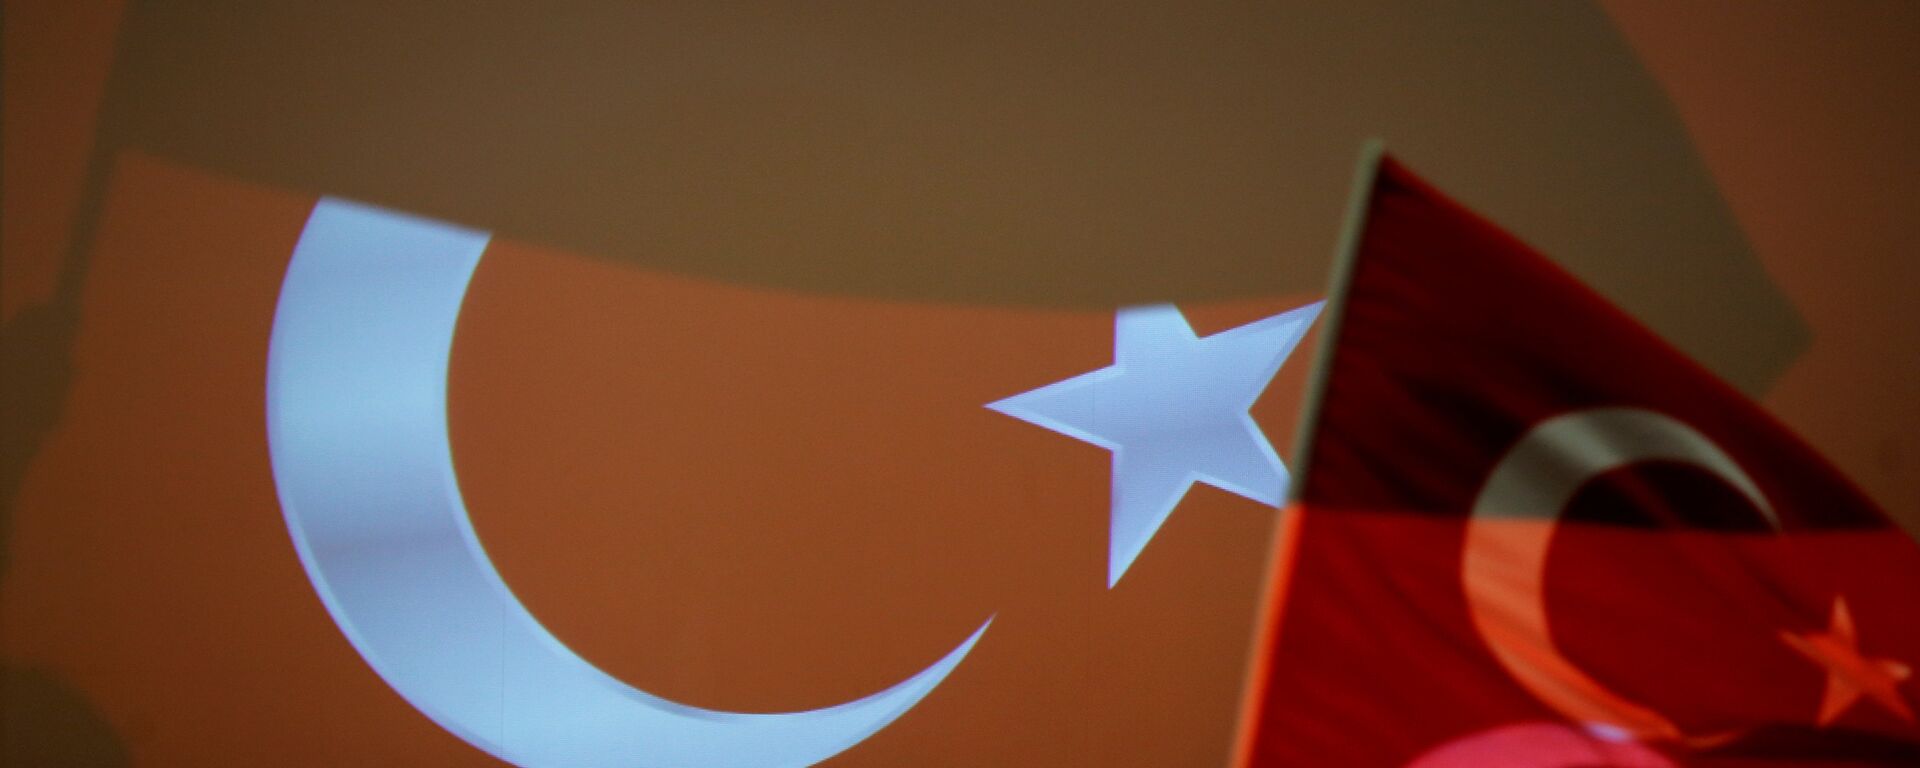 Bandera de Turquía - Sputnik Mundo, 1920, 05.10.2020